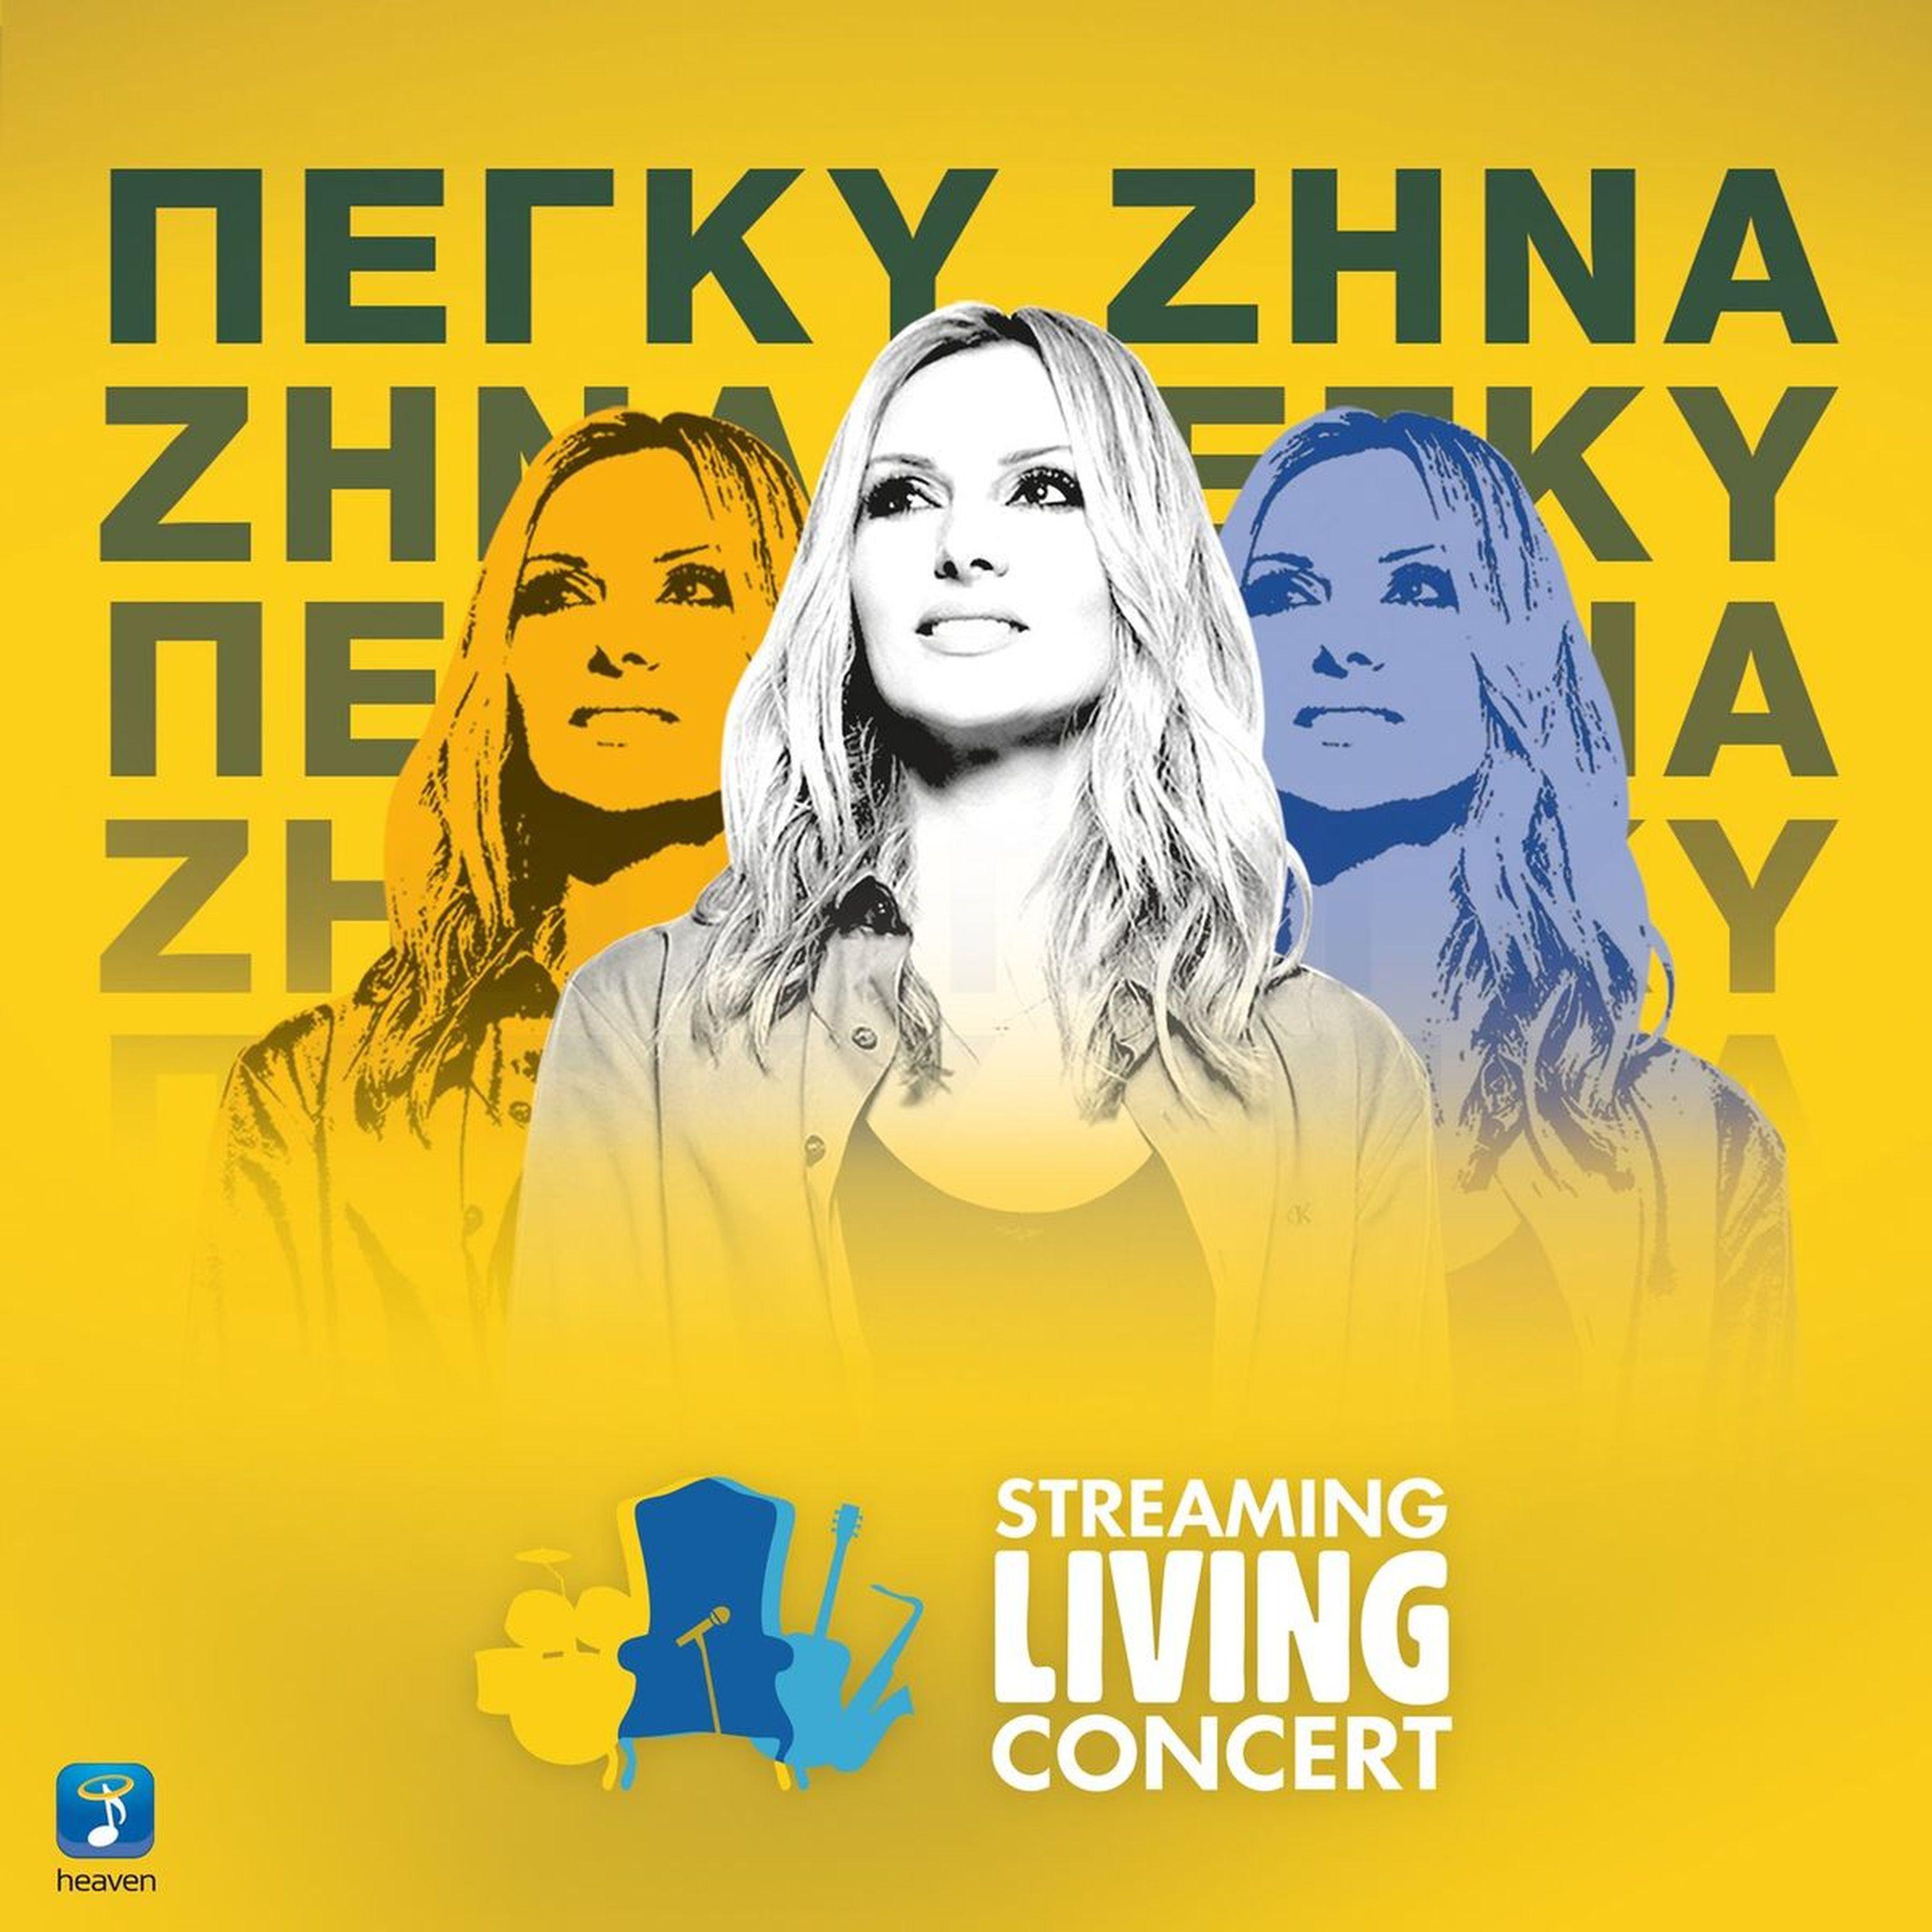 Peggy Zina - Ligaria Mou Glikia (Streaming Living Concert)